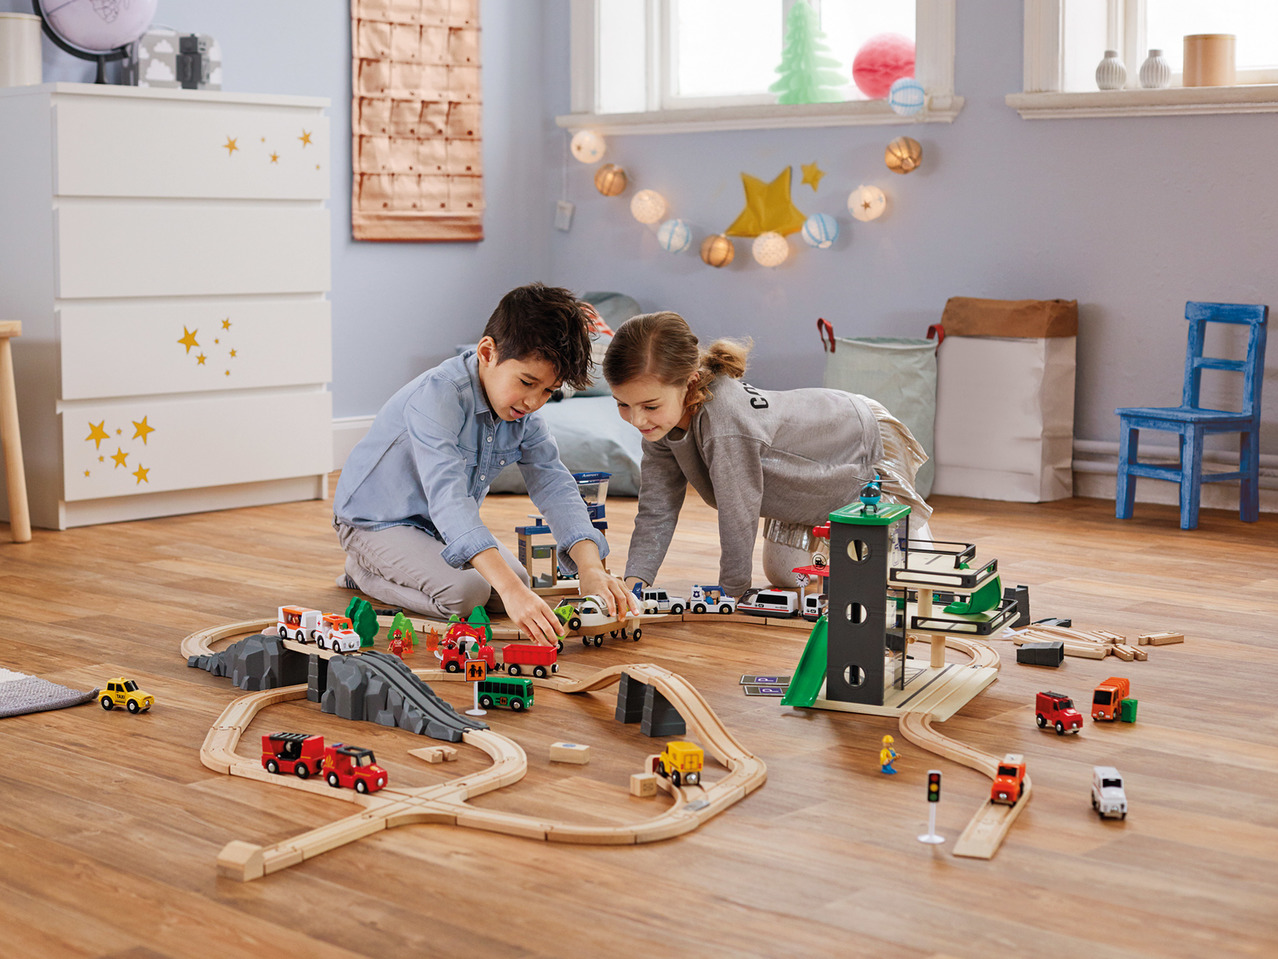 Playtive Junior Wooden Railway Set1